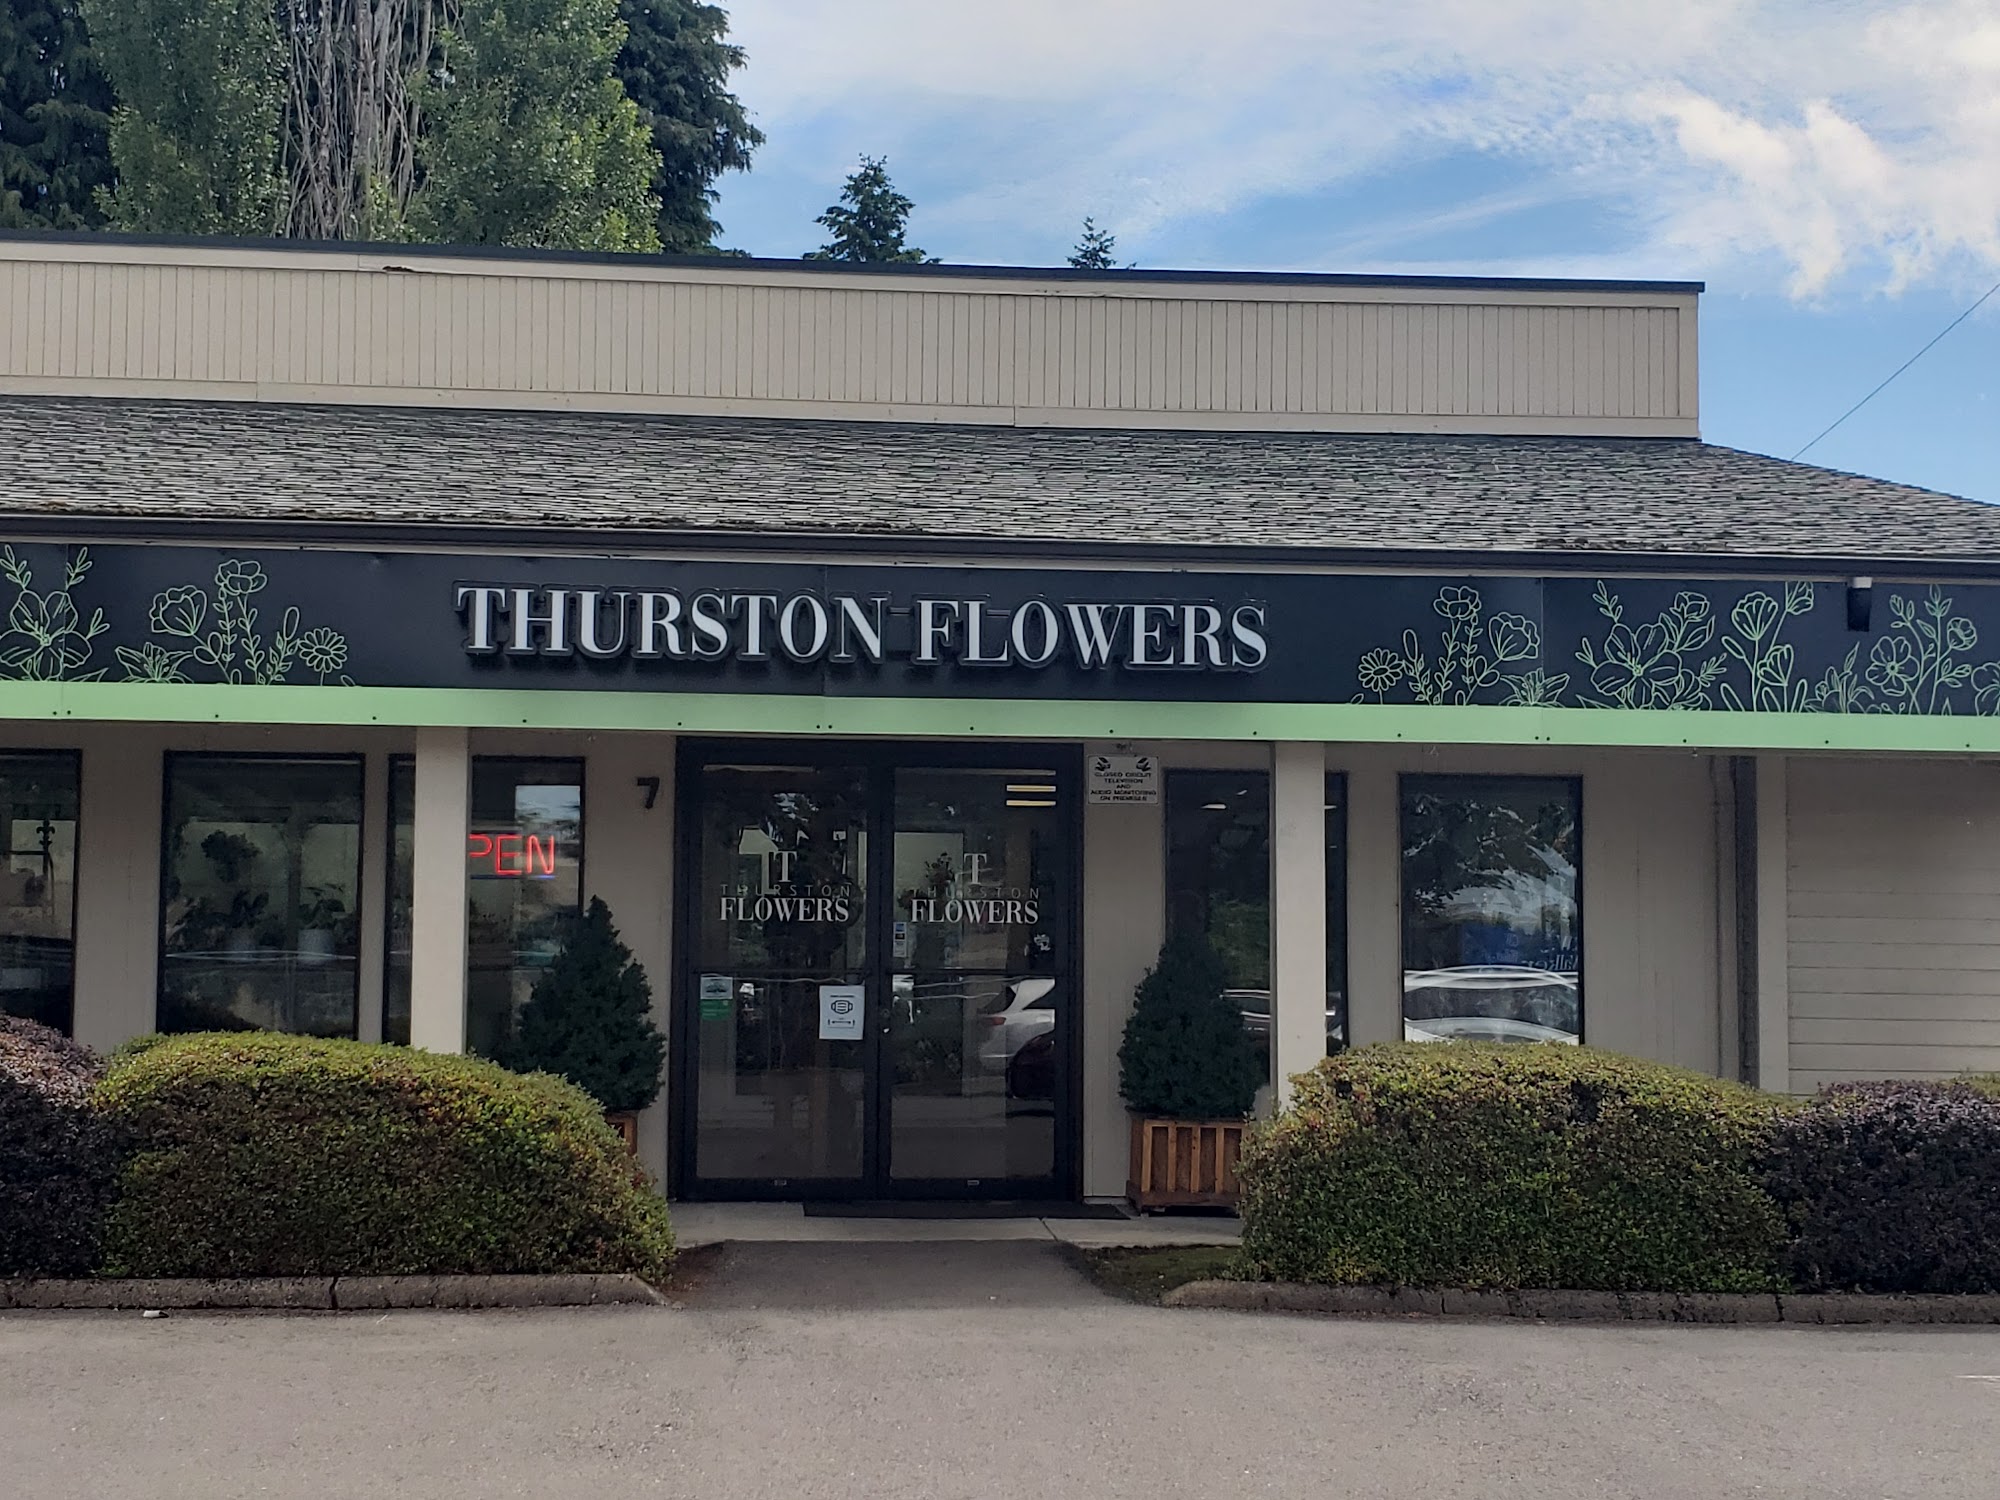 Thurston Flowers